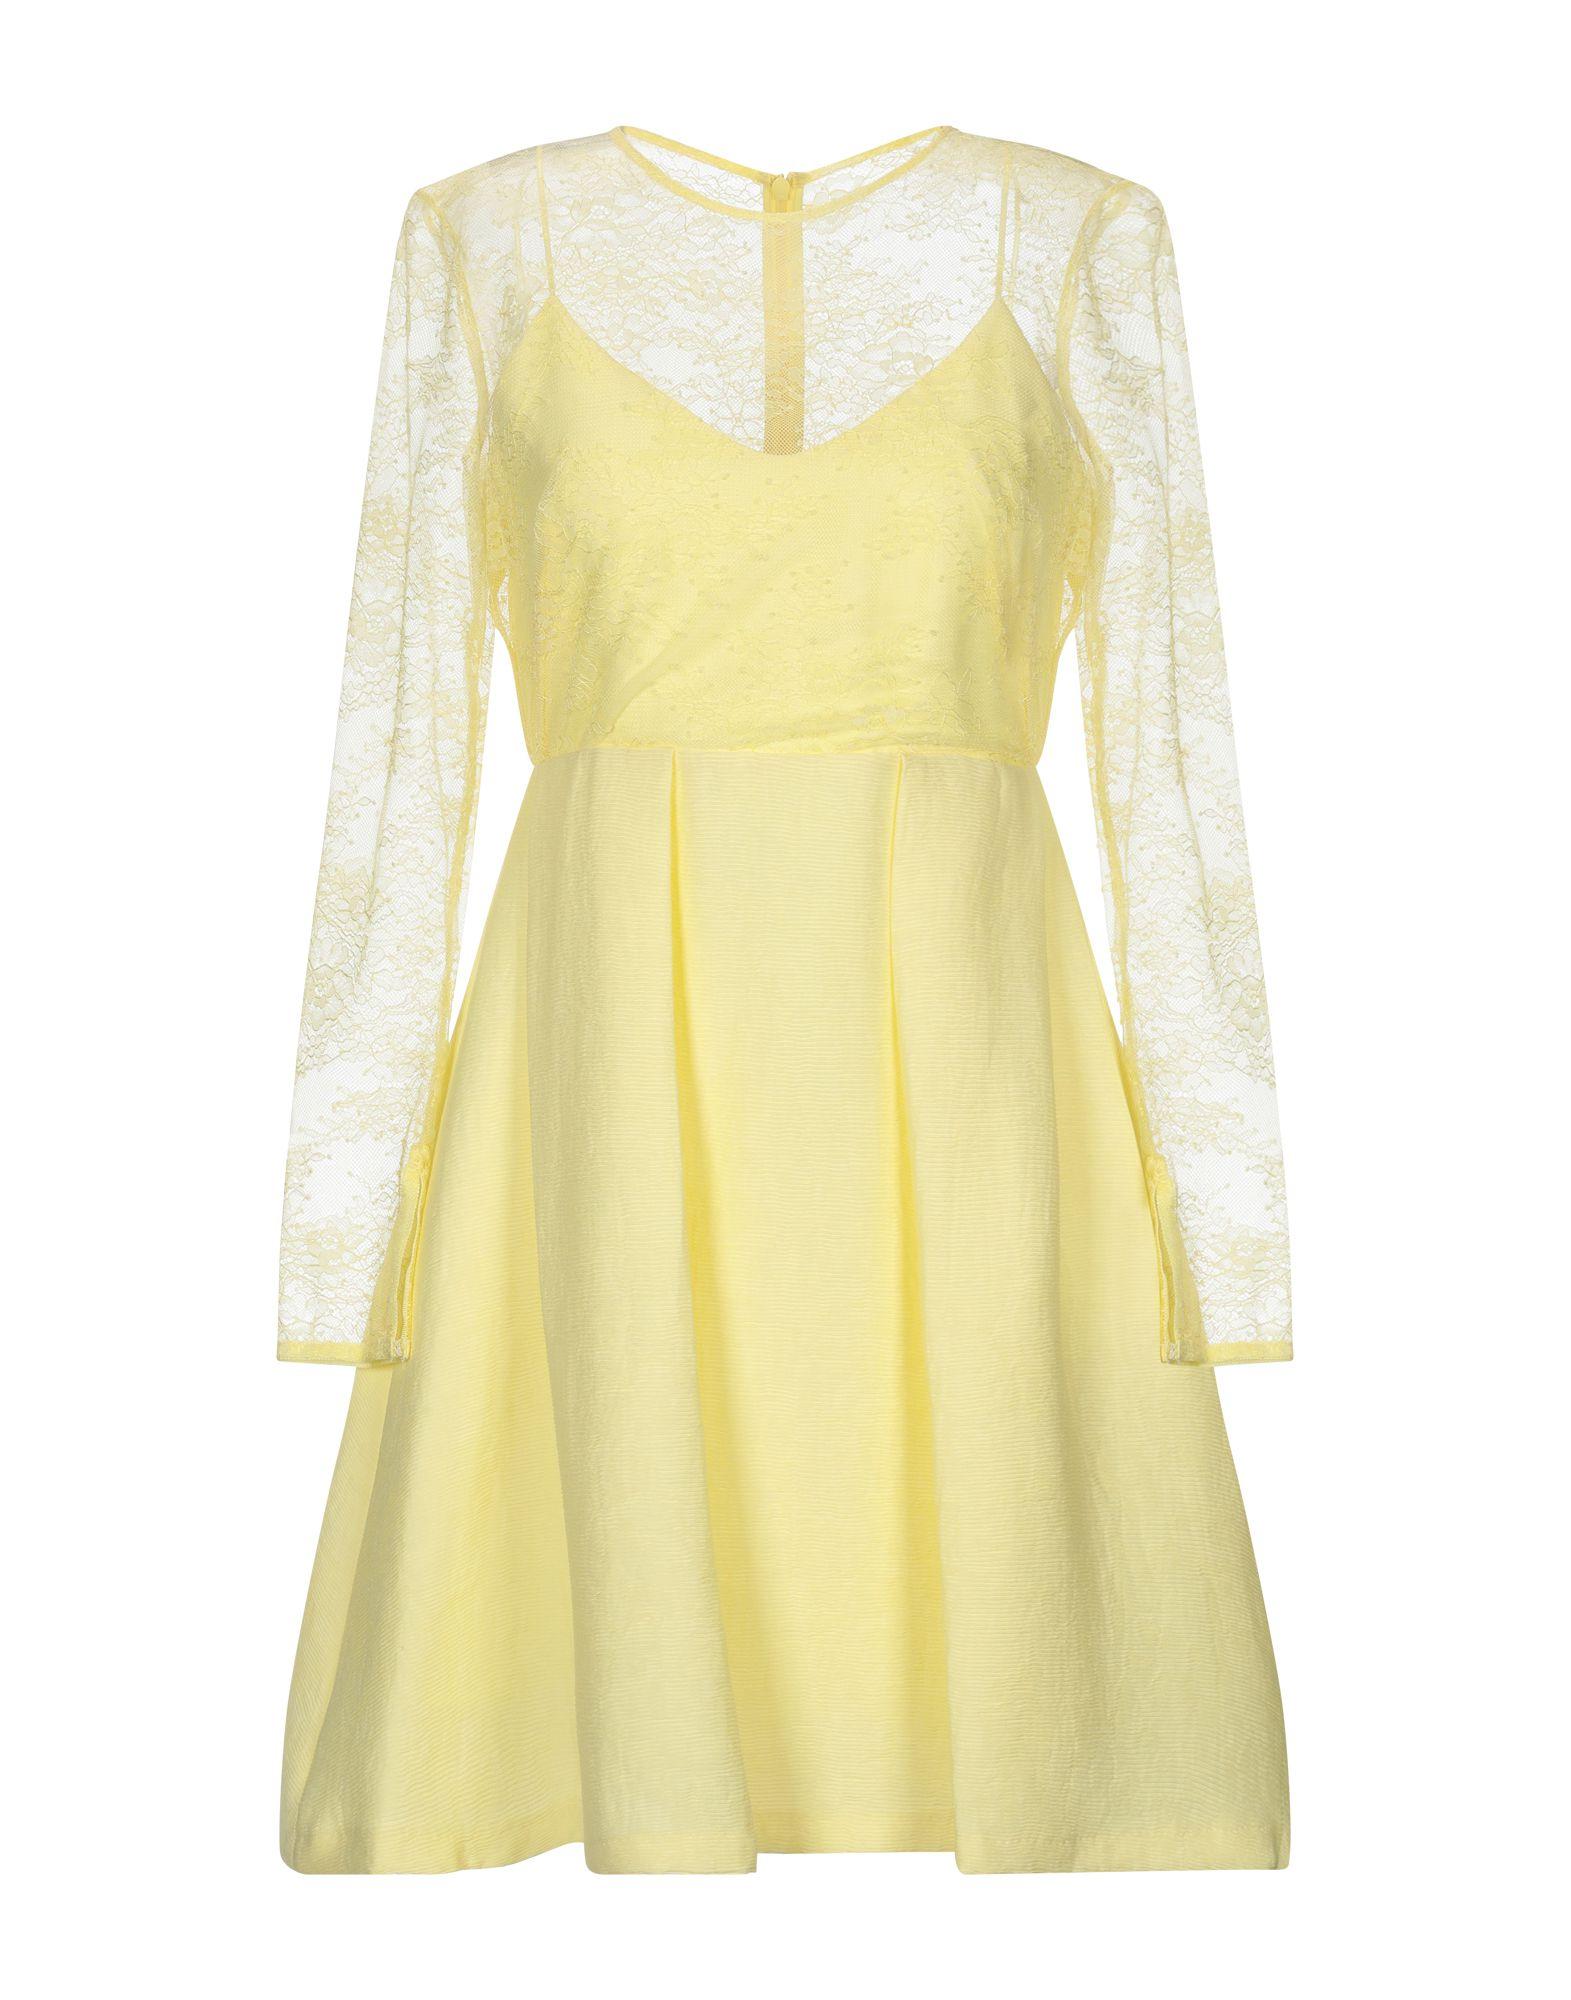 Sandro Lace Short Dress in Light Yellow (Yellow) - Lyst